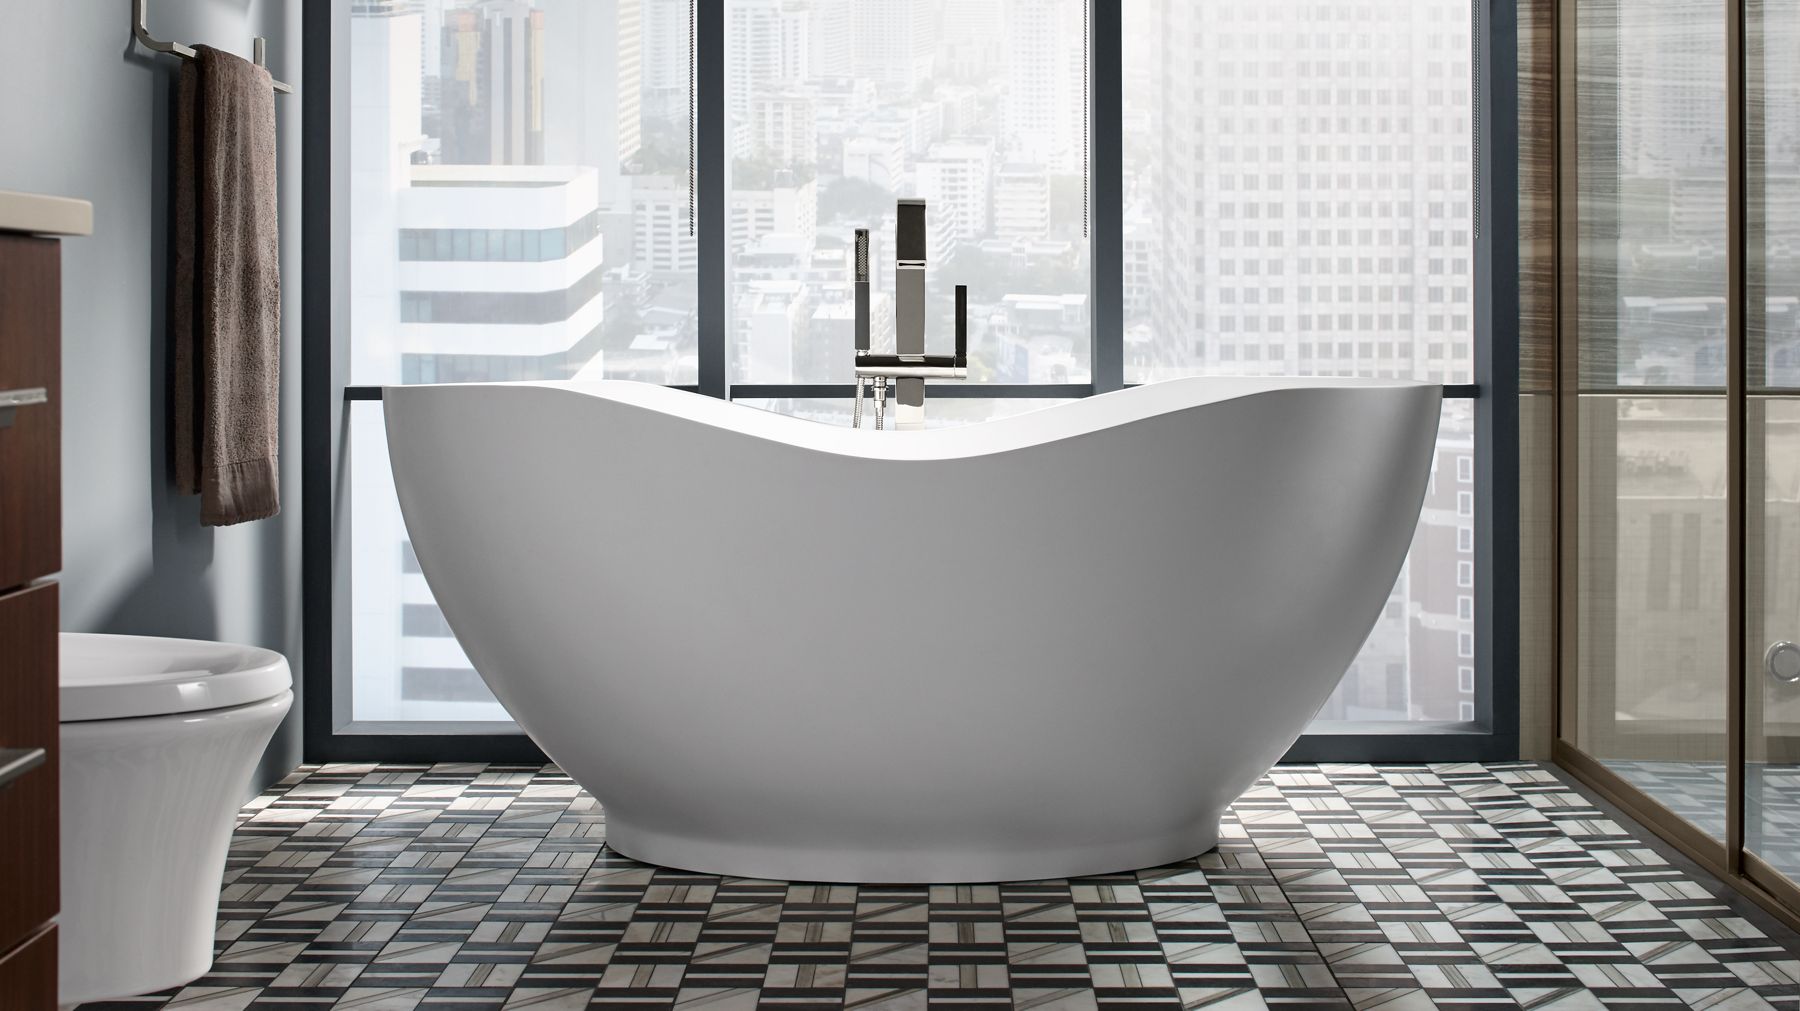 Master bathroom with teacup-shape bathtub and city view